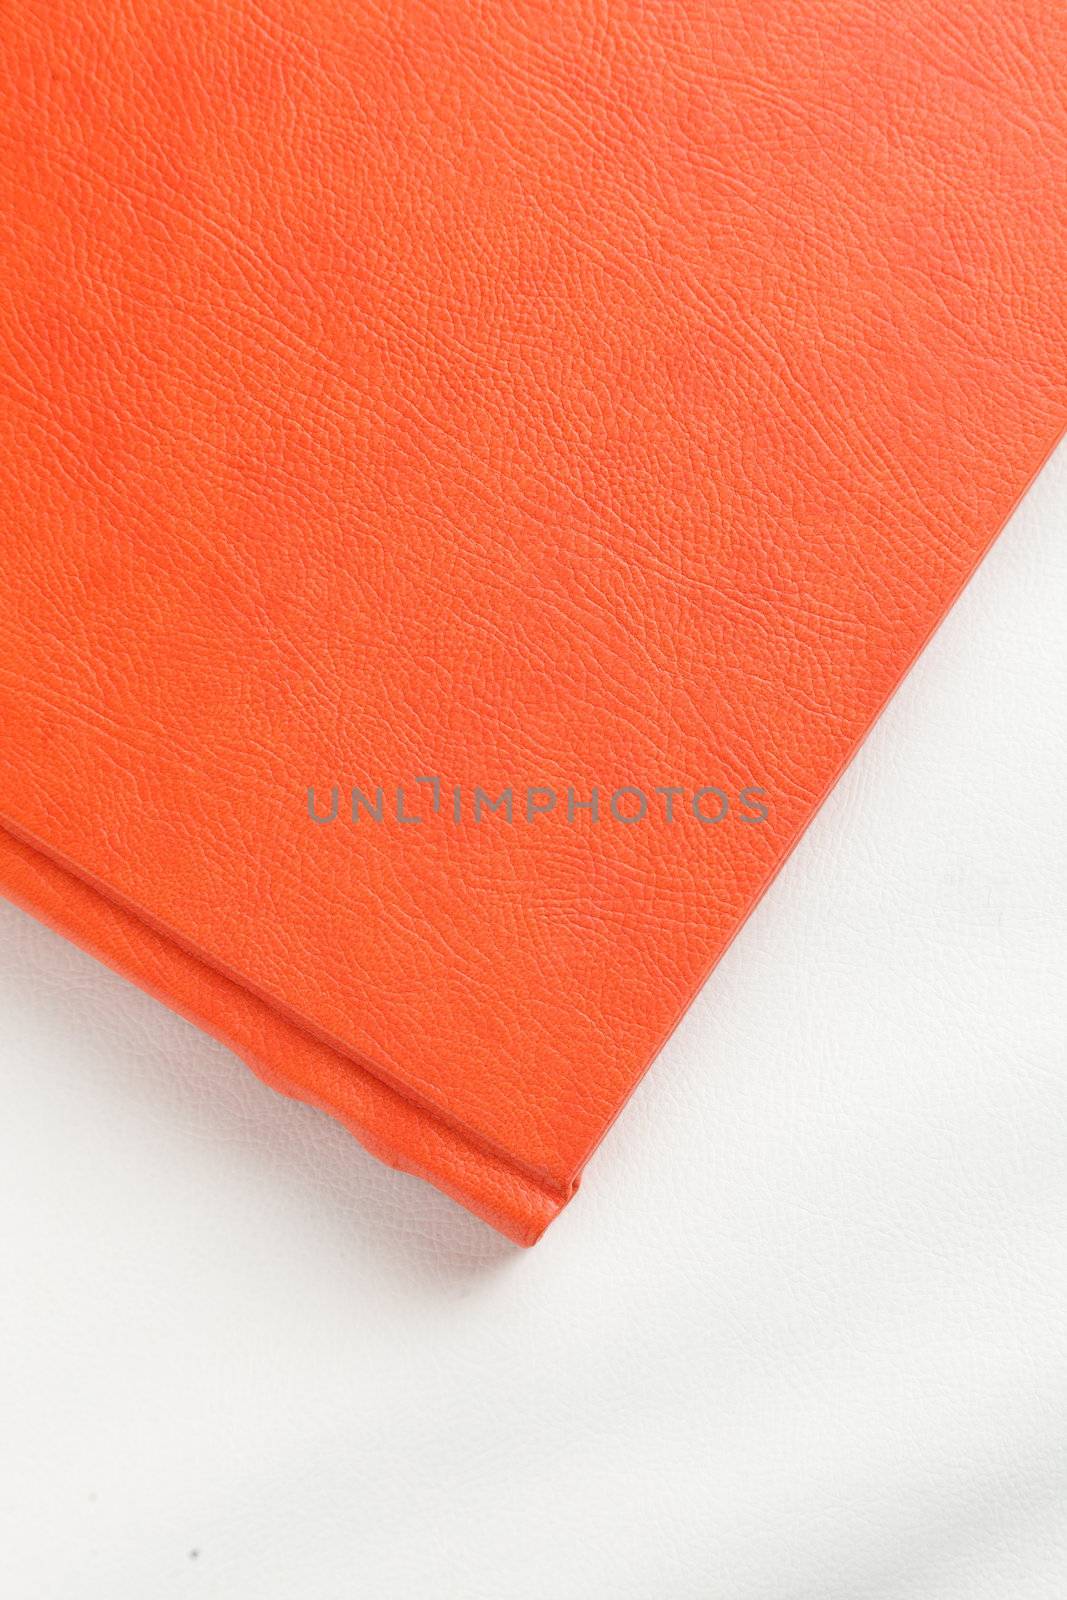 orange leather book on bright background